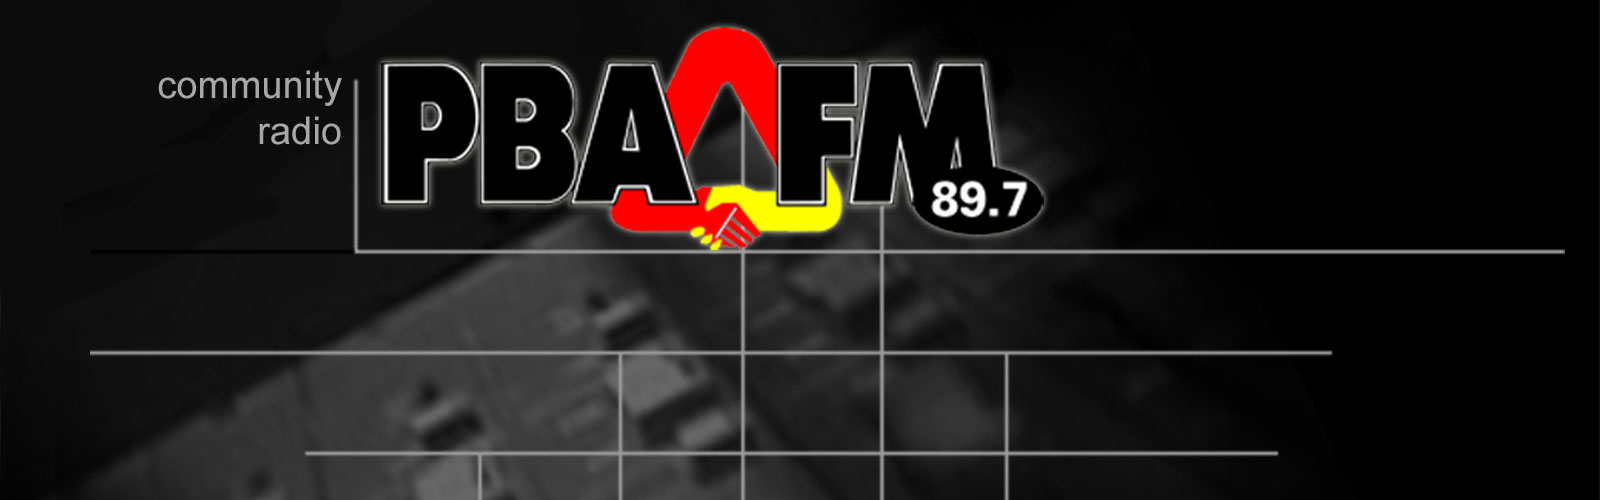 PBA-FM Header Image